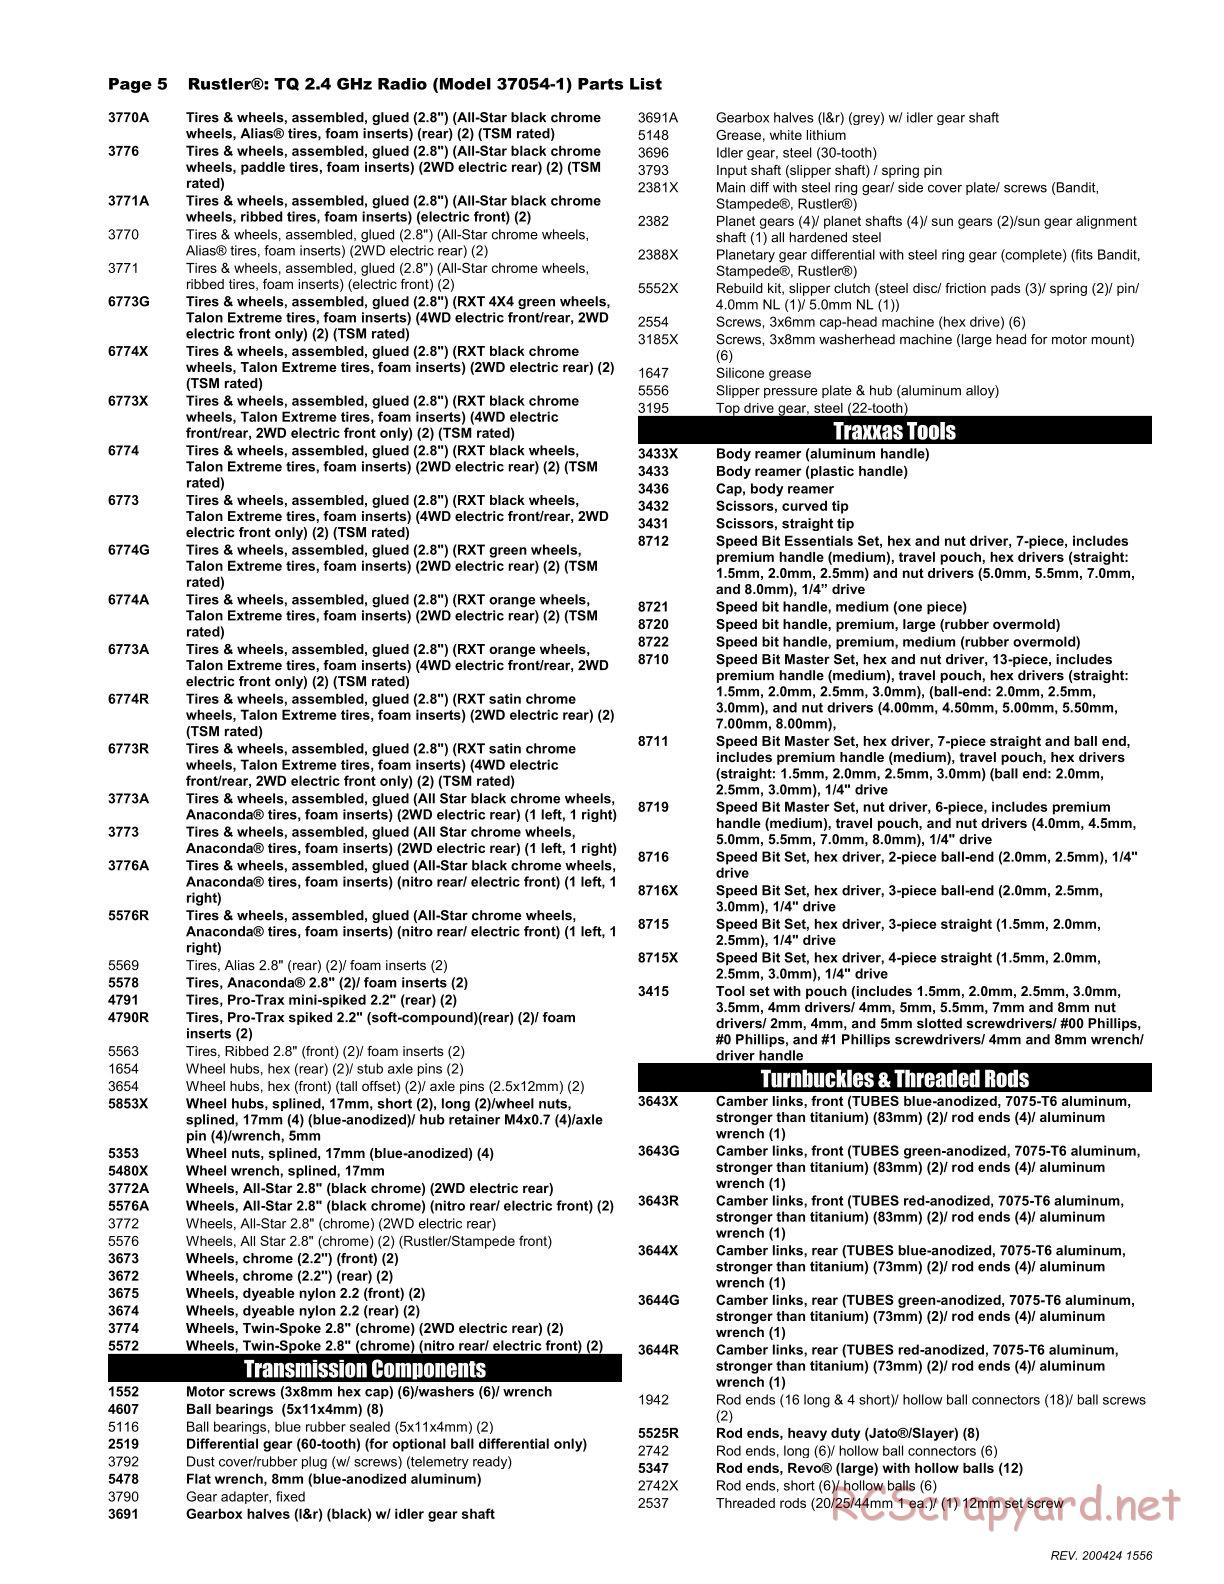 Traxxas - Rustler XL-5 - Parts List - Page 5